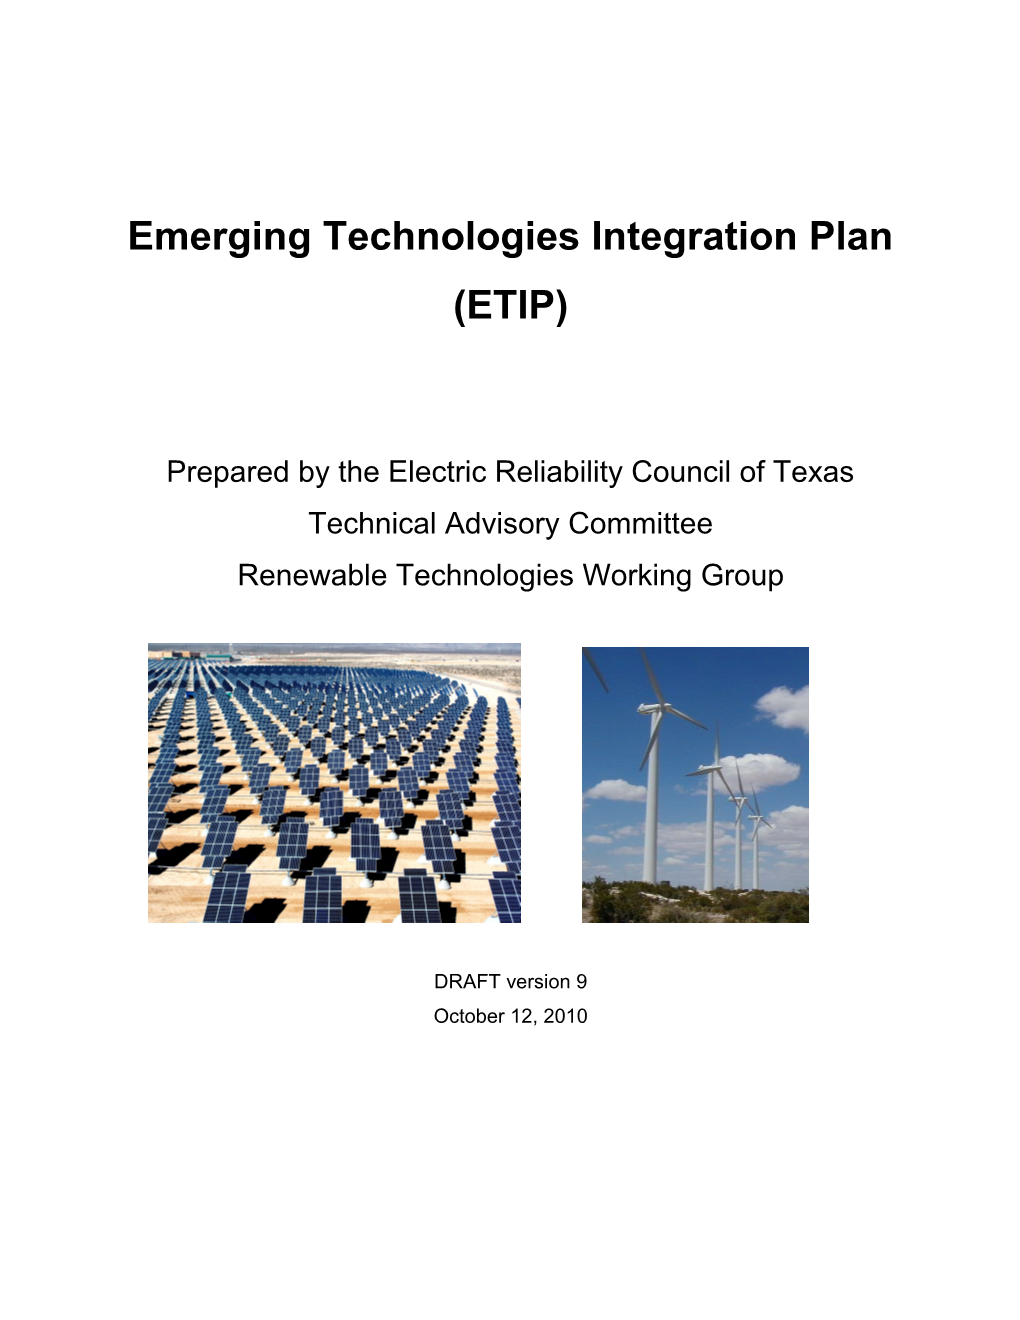 Emerging Technologies Integration Plan (ETIP)